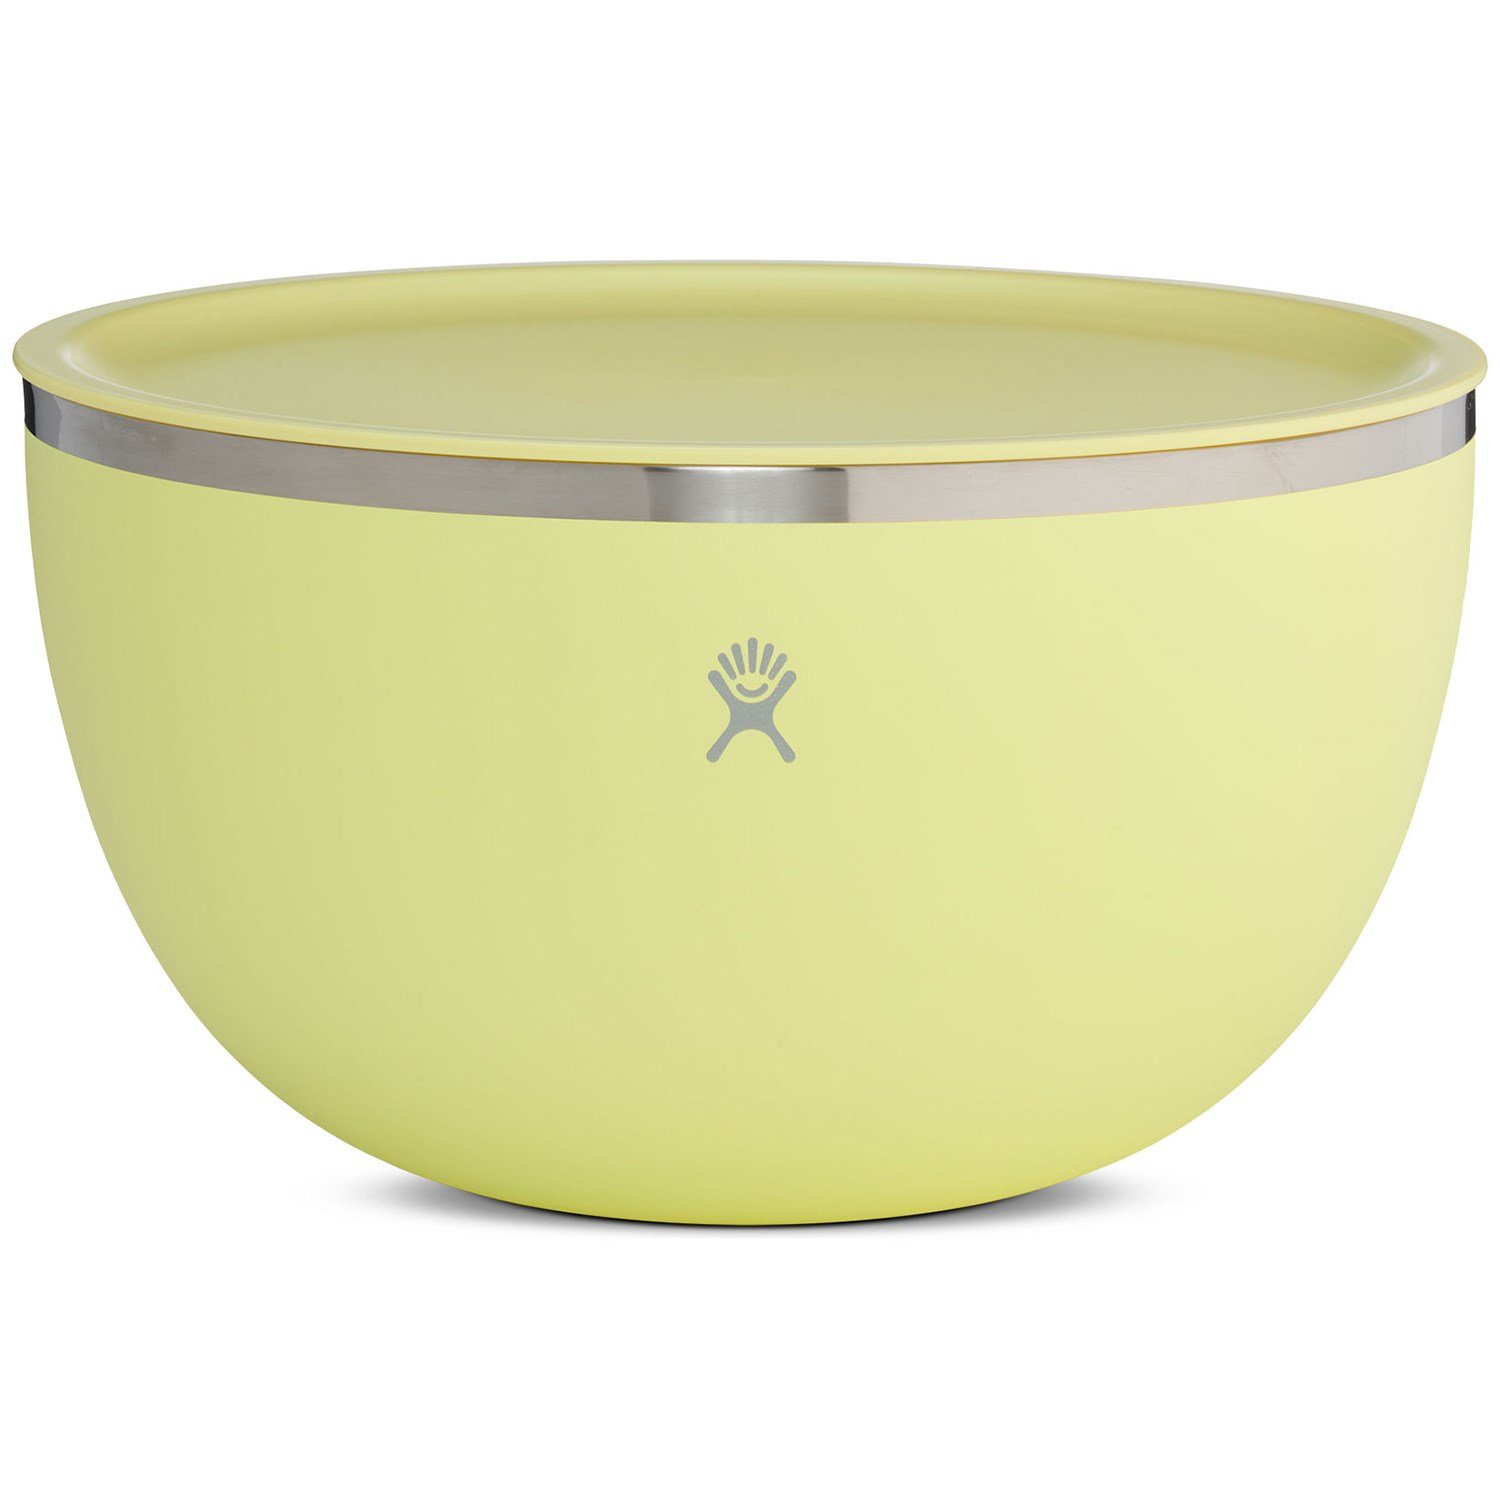 https://images.evo.com/imgp/zoom/188733/784089/hydro-flask-5-quart-serving-bowl-with-lid-.jpg